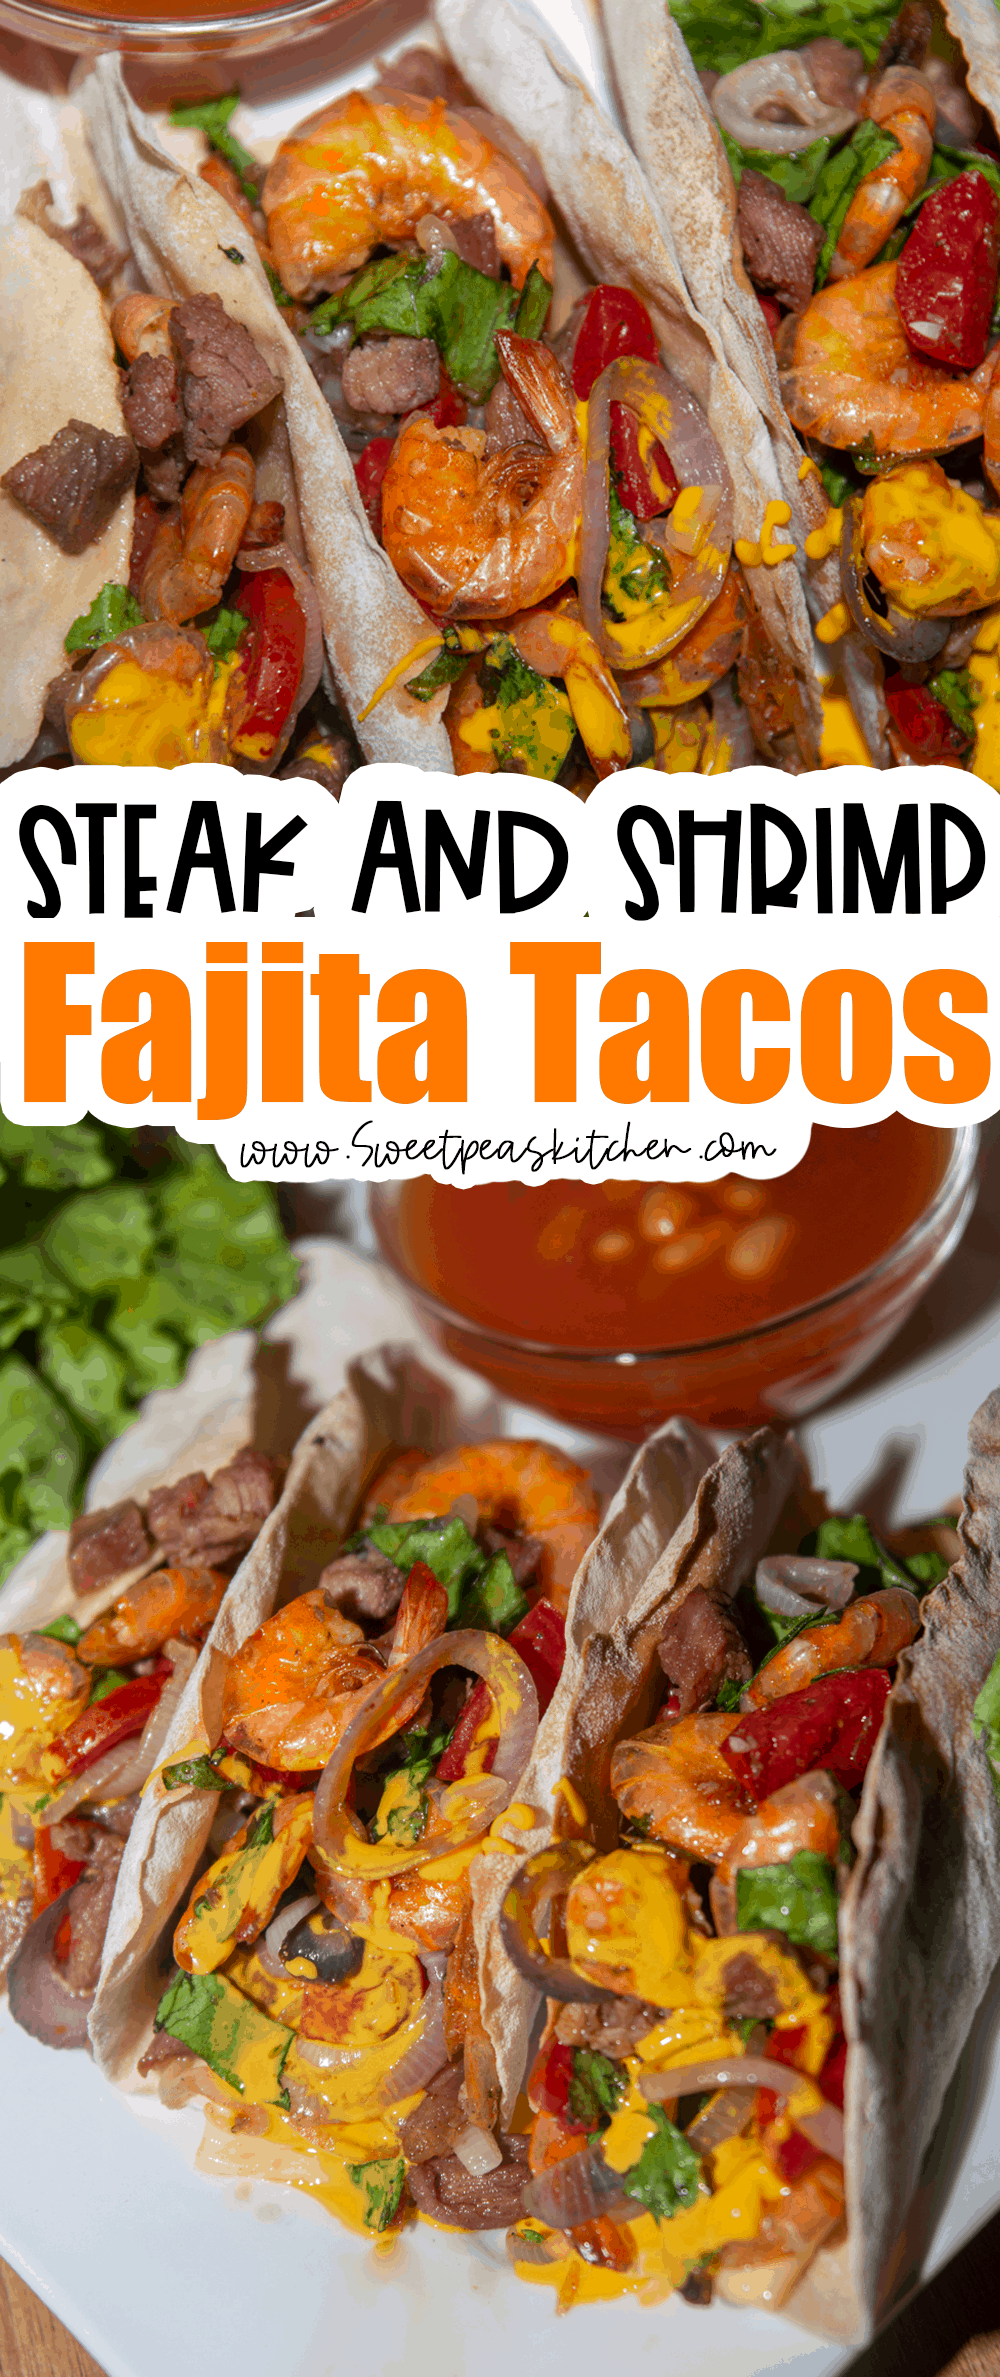 Steak and Shrimp Fajita Tacos